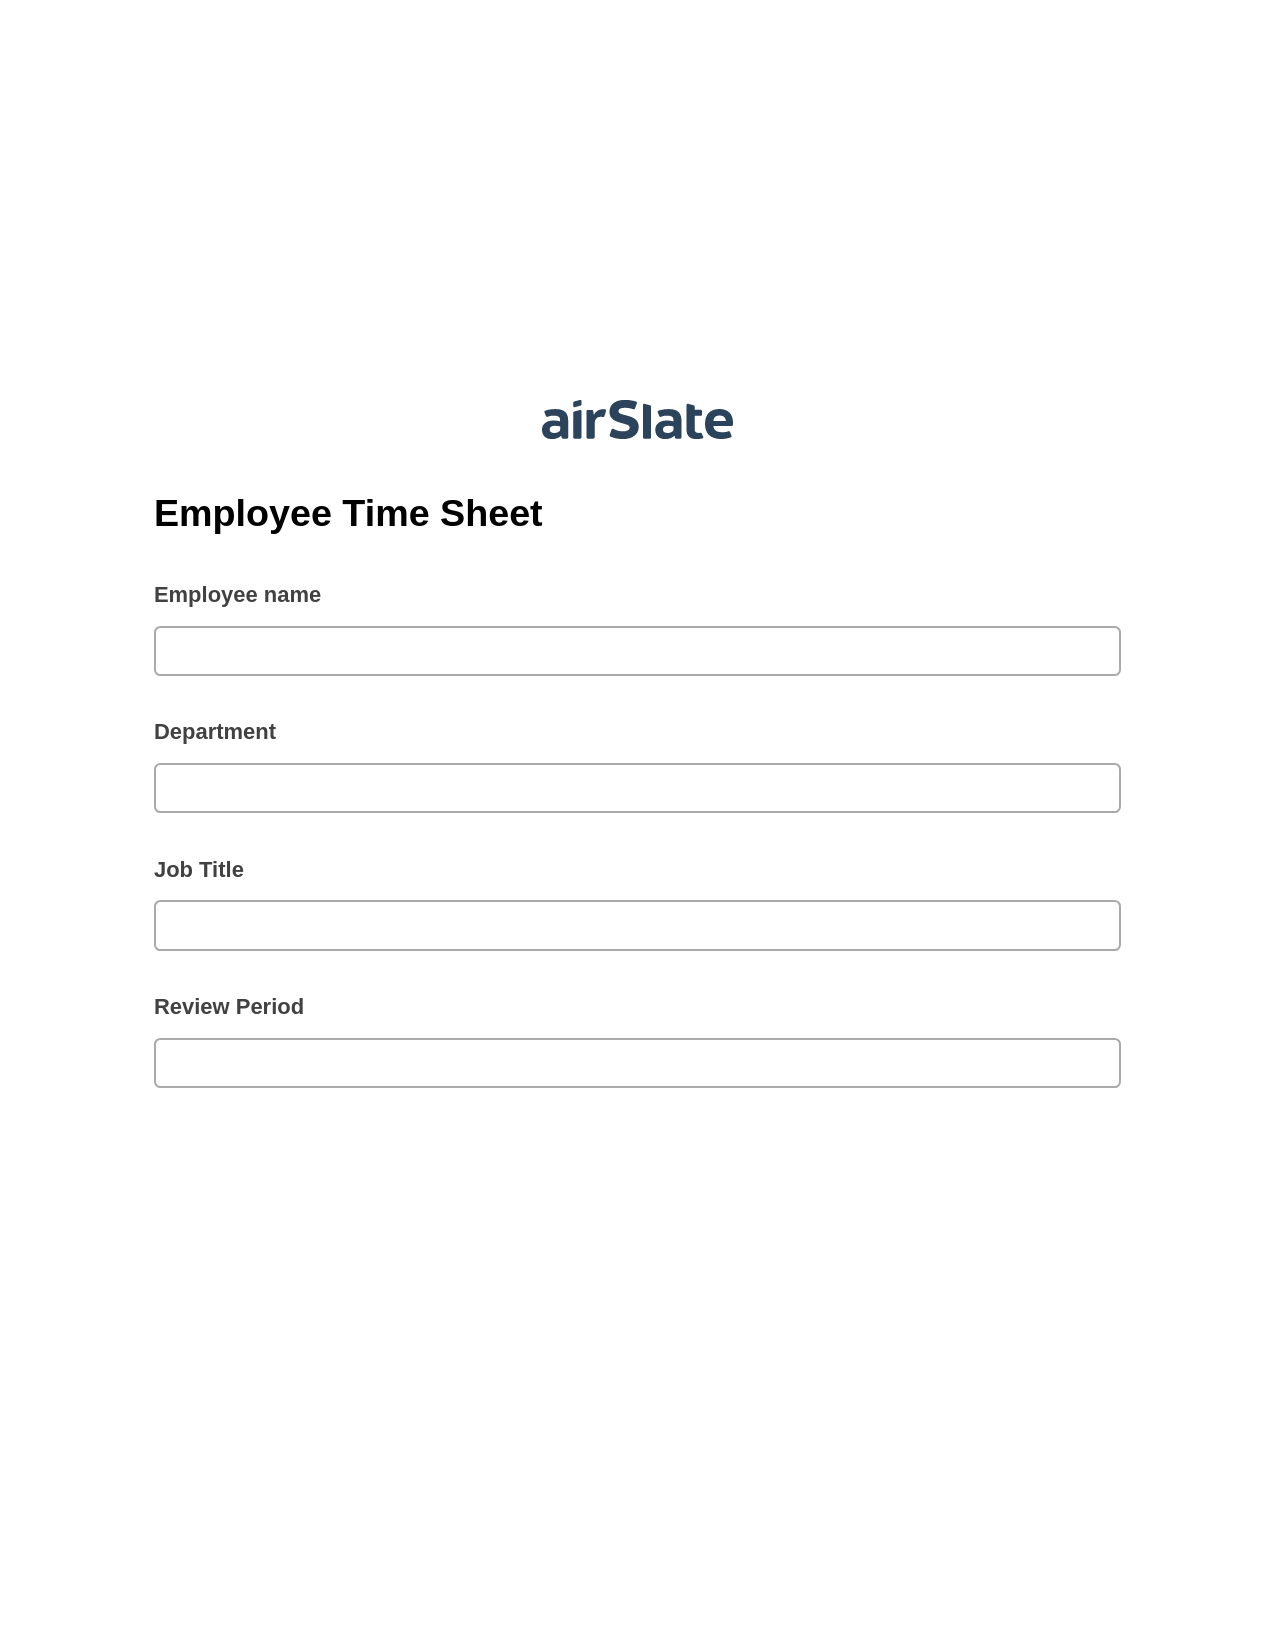 Multirole Employee Time Sheet Pre-fill from CSV File Bot, Create Salesforce Records Bot, Slack Two-Way Binding Bot